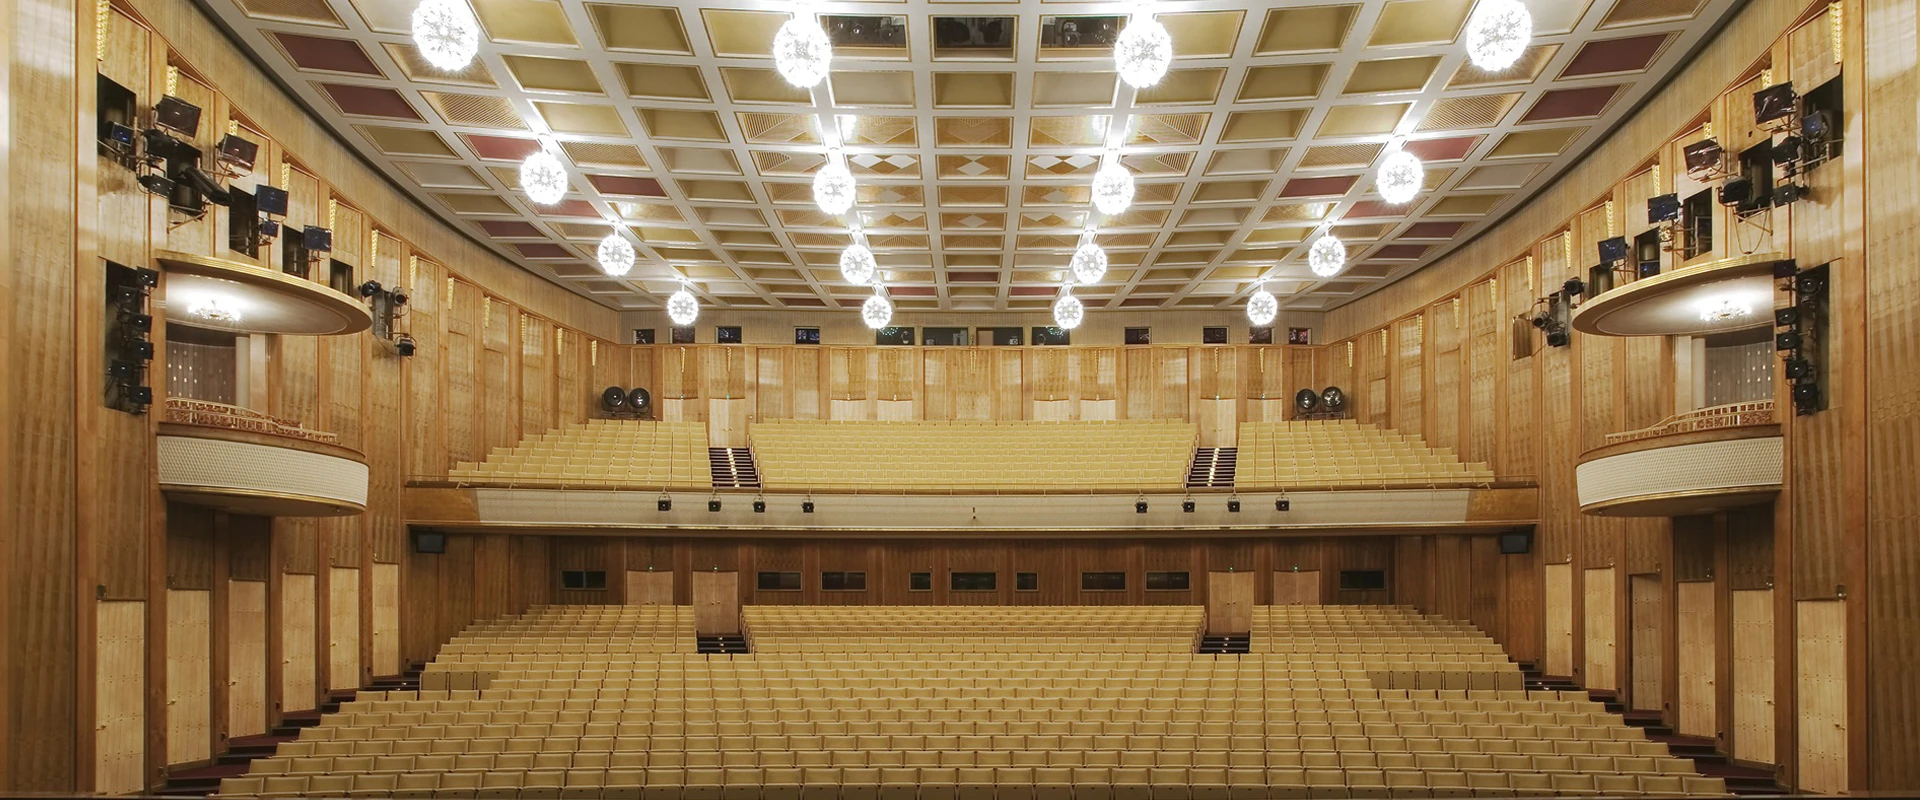 High quality Auditorium Seats